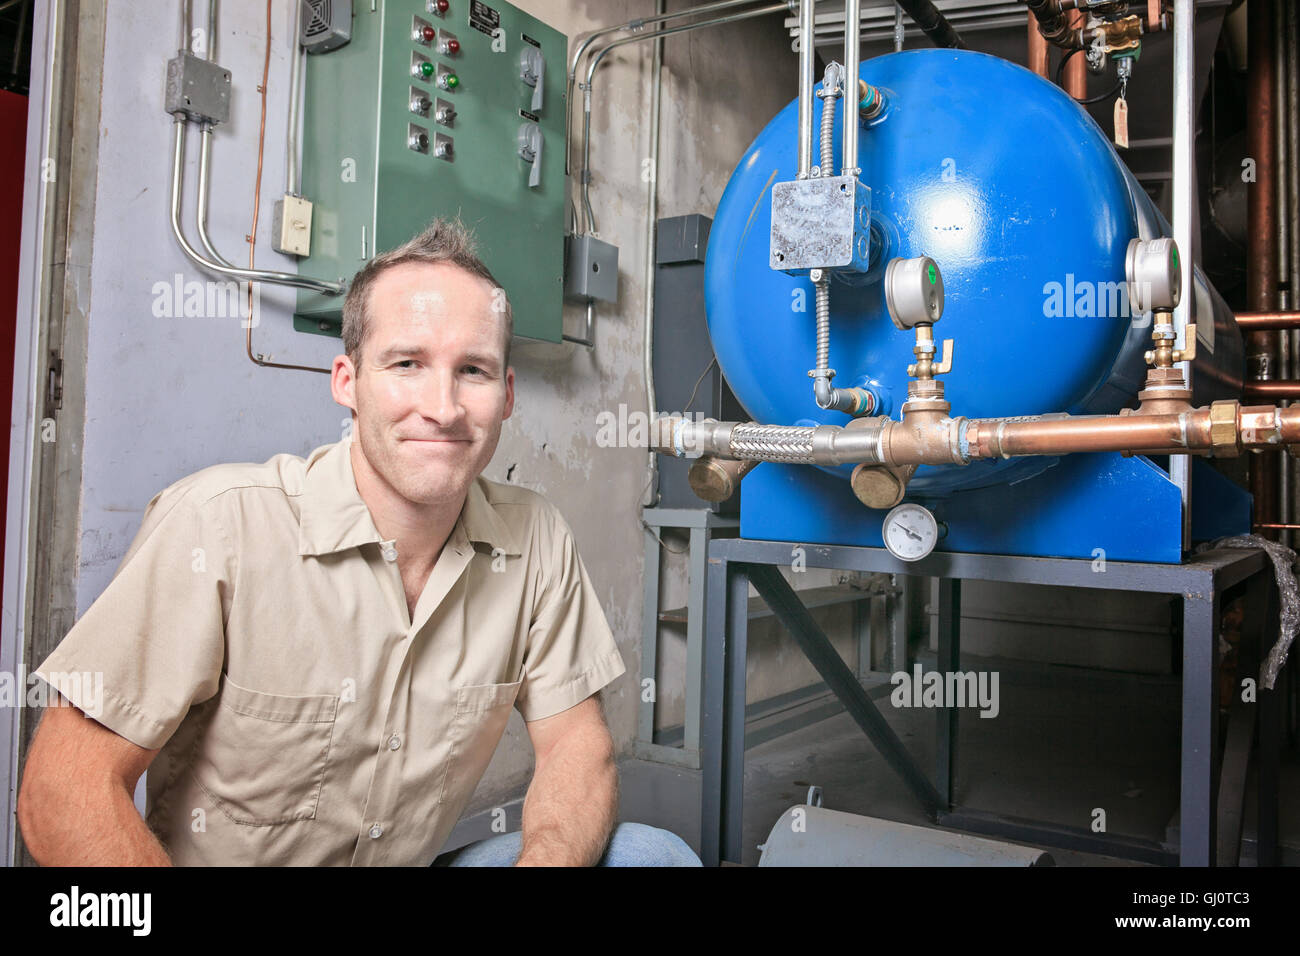 An Air Conditioner Repair Man at work Stock Photo